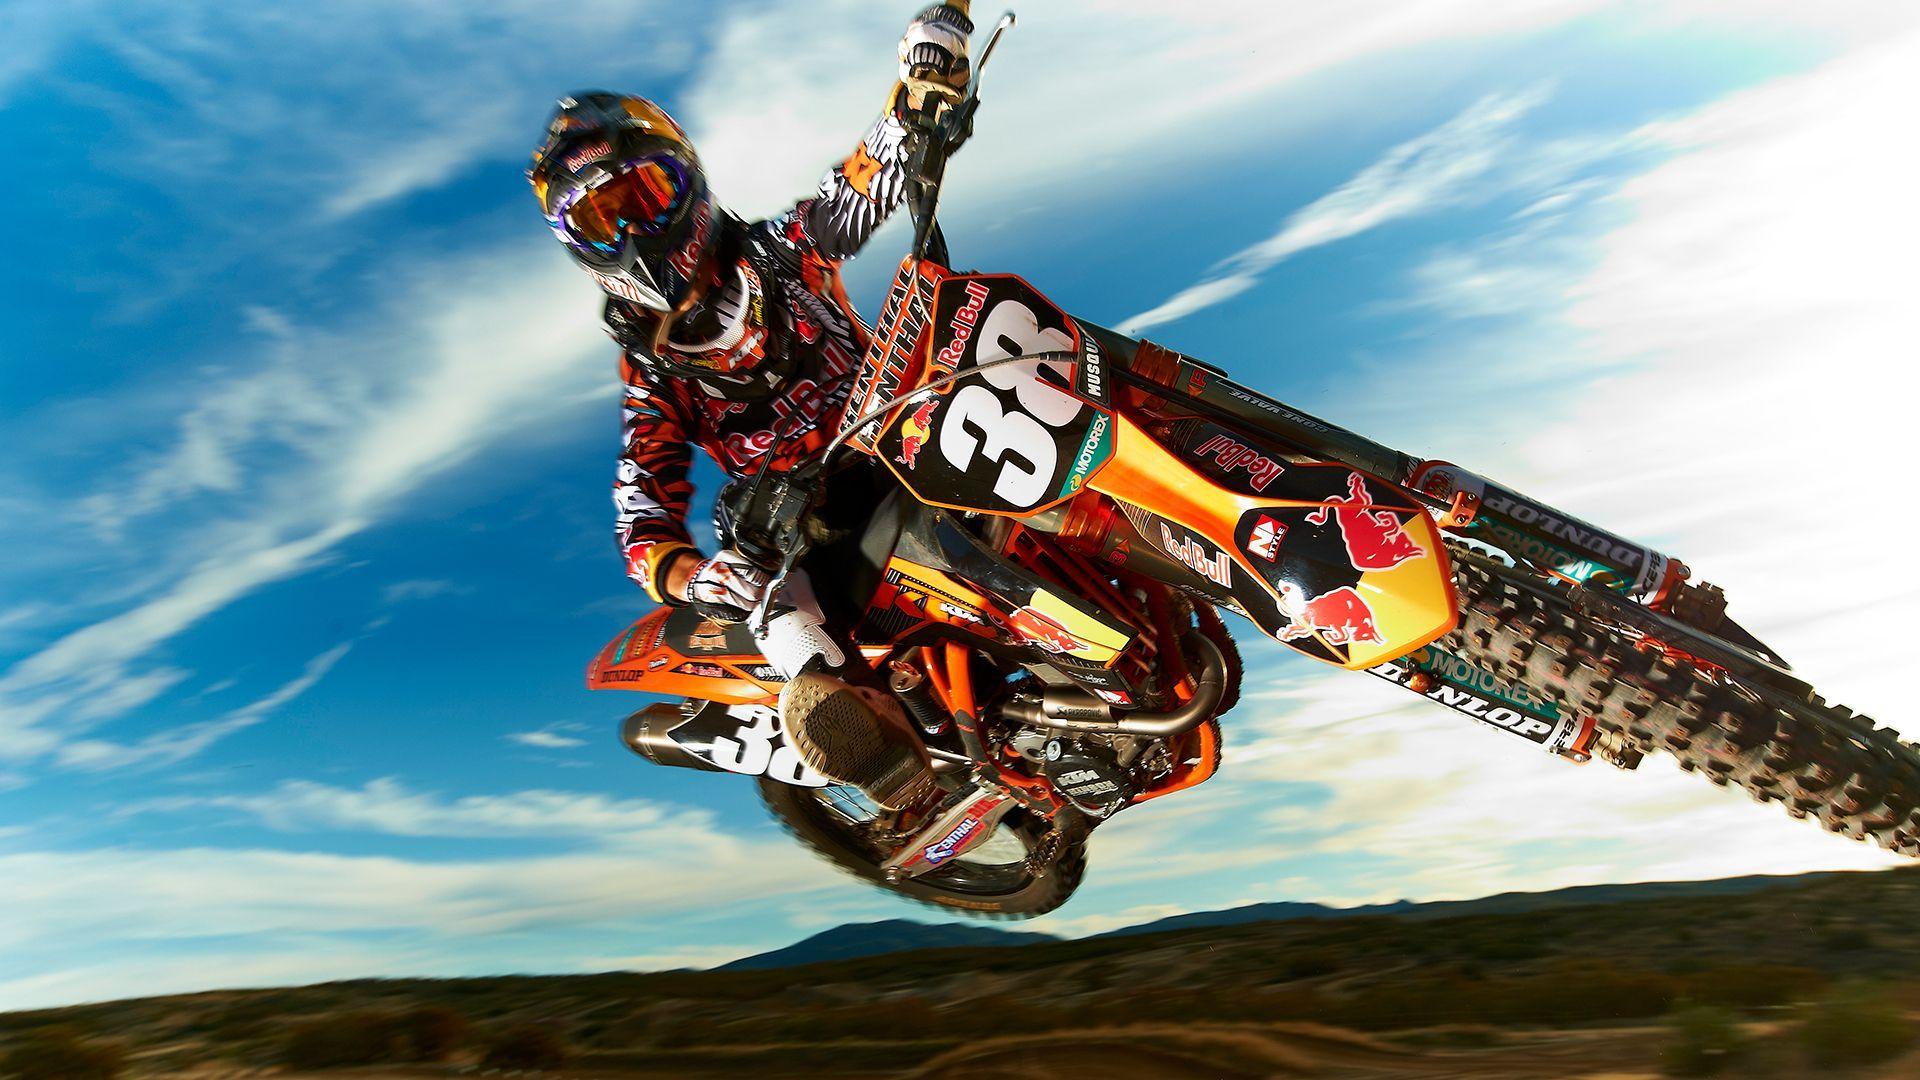 crossmotor wallpaper zoeken. motocross picture I like